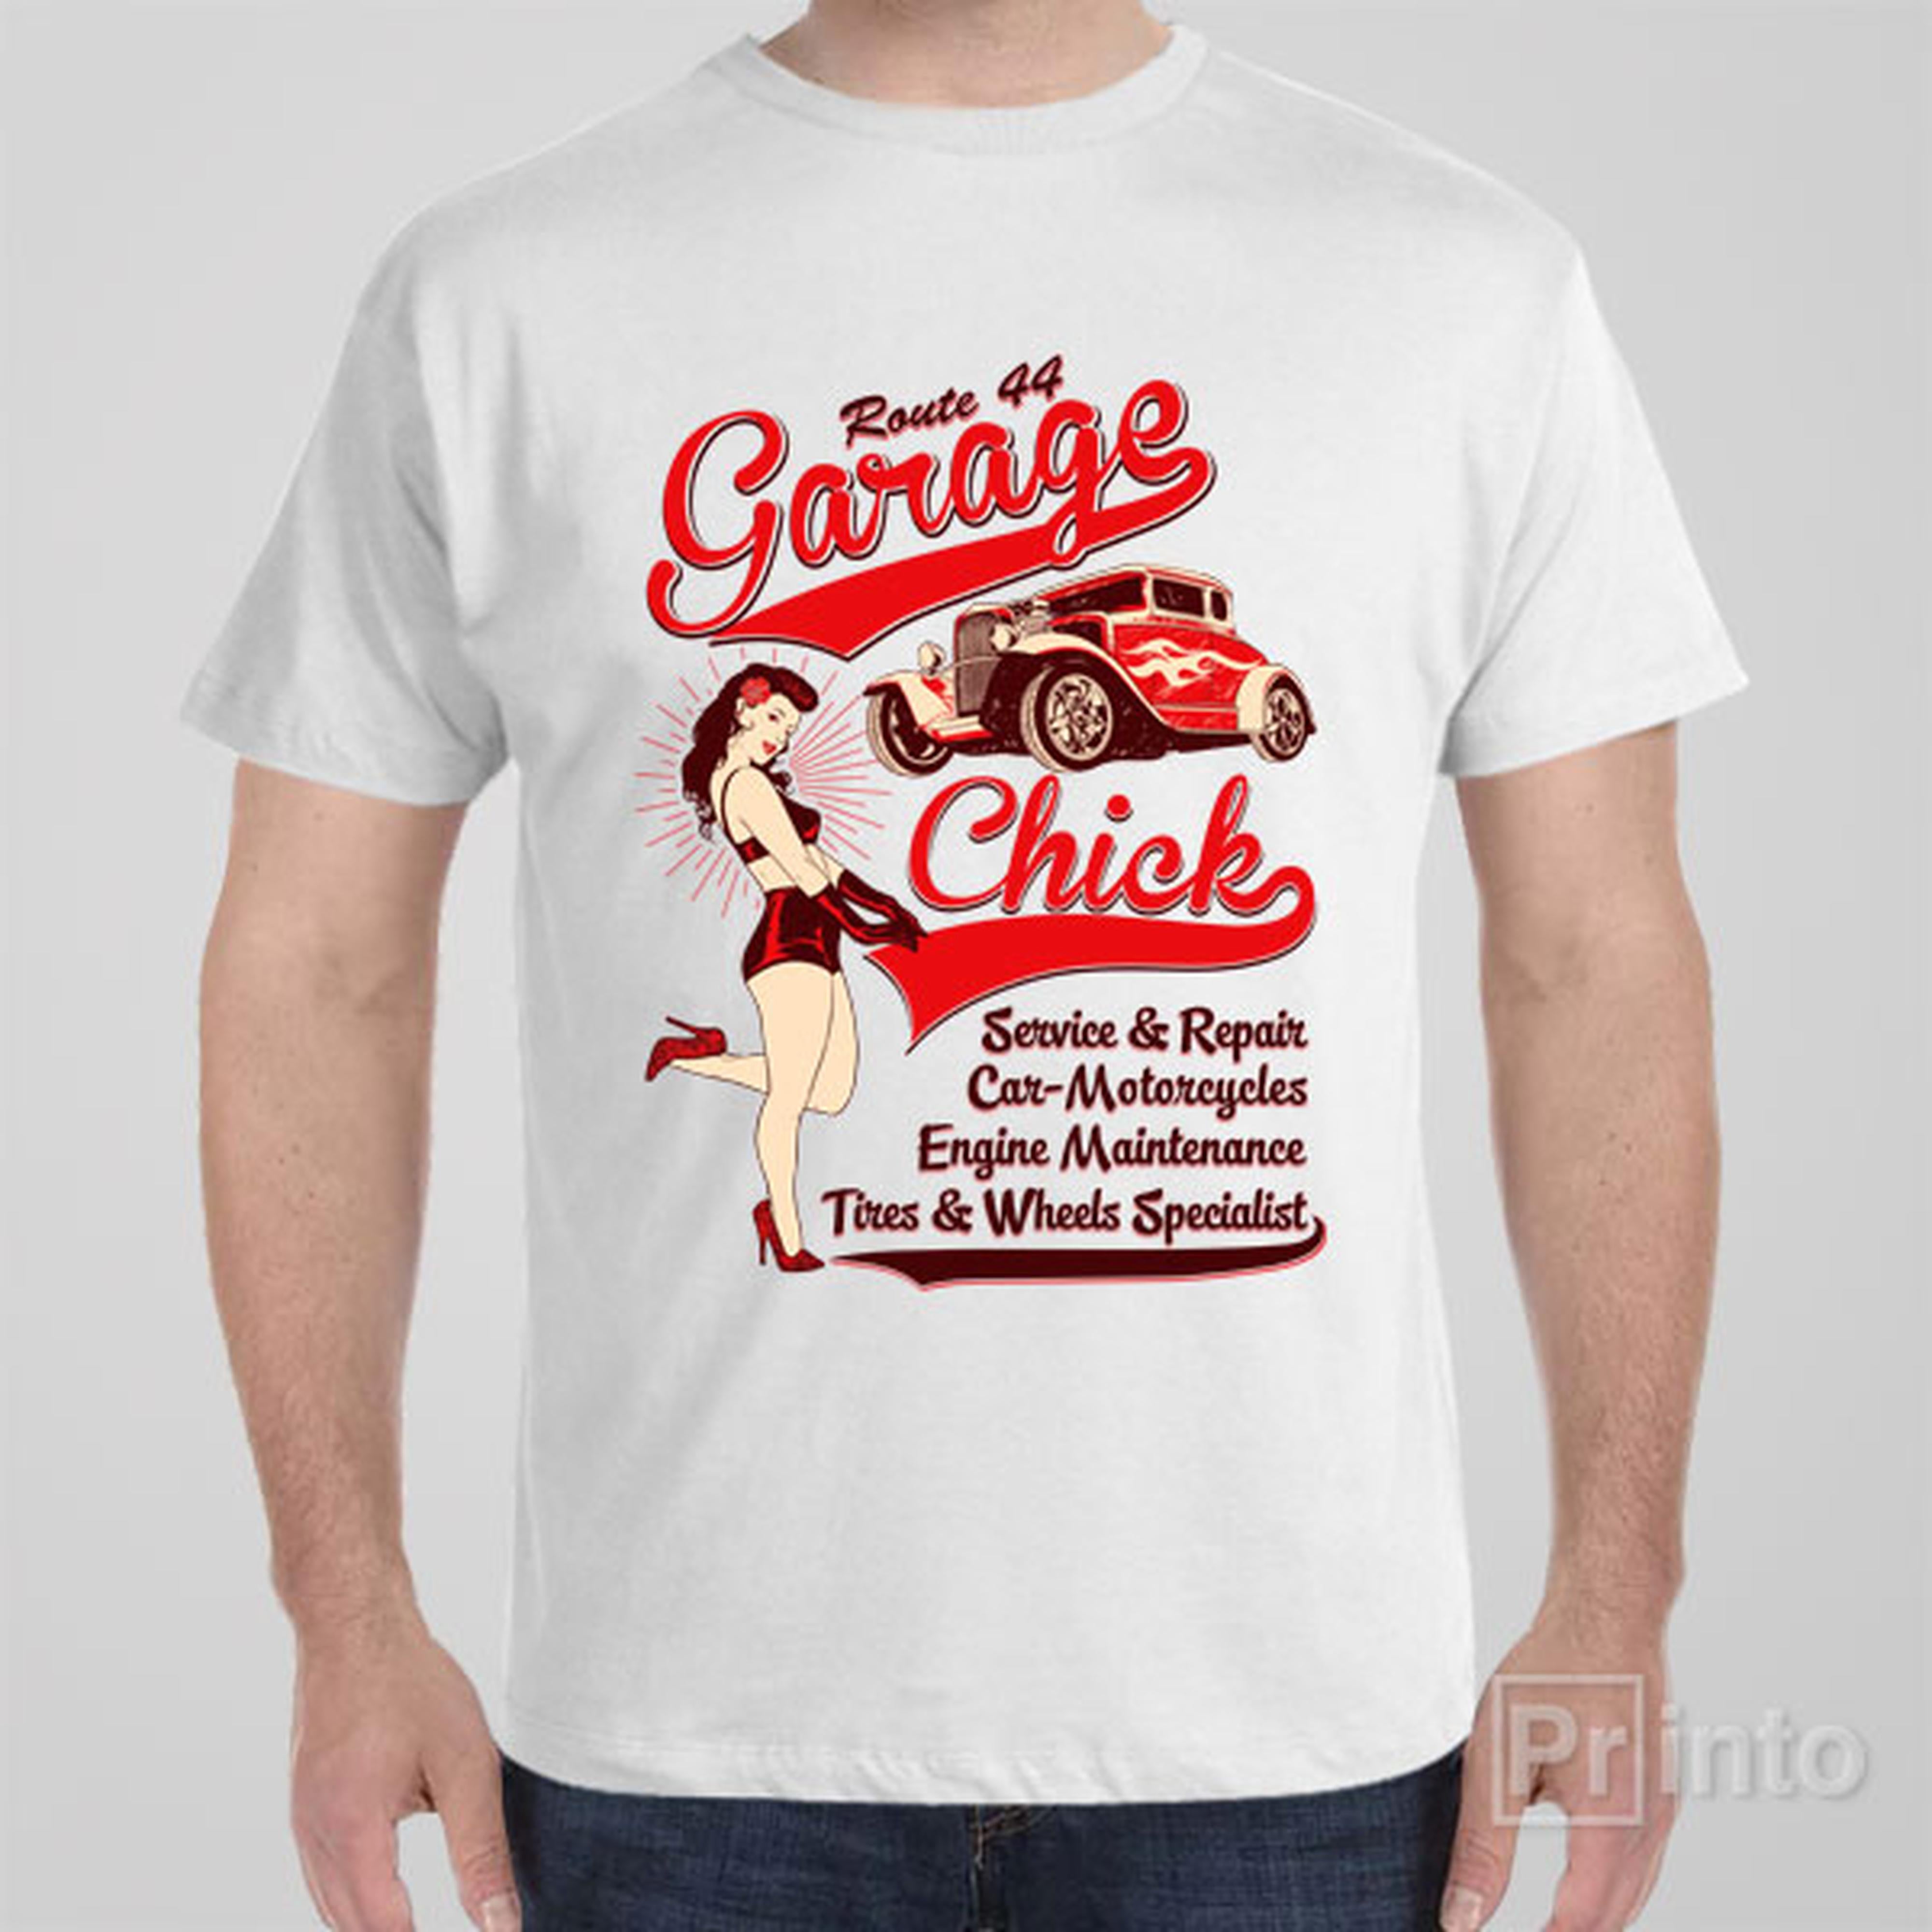 garage-chick-t-shirt